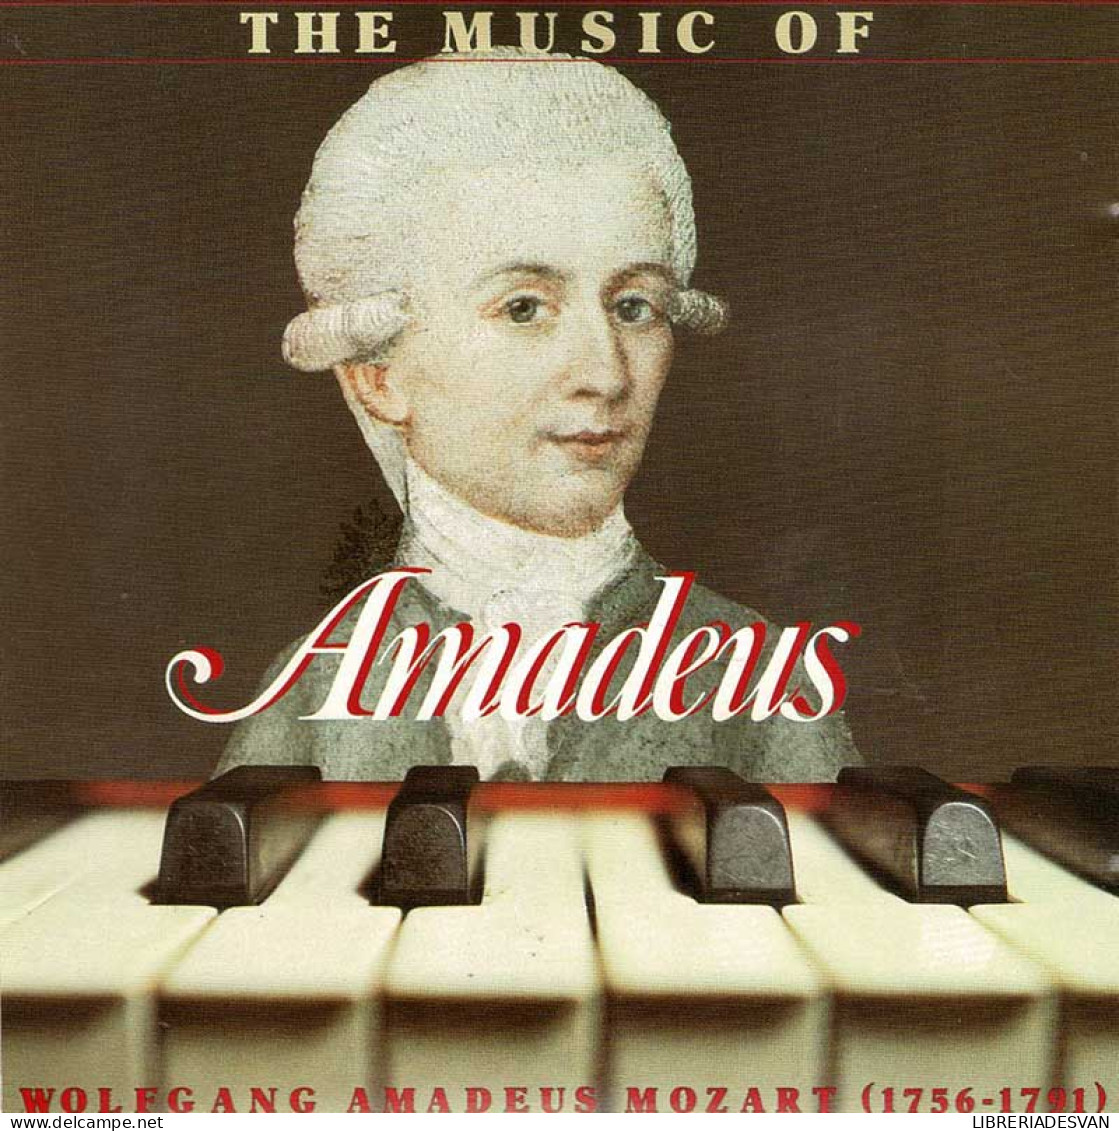 Wolfgang Amadeus Mozart - The Music Of Amadeus. CD - Classical